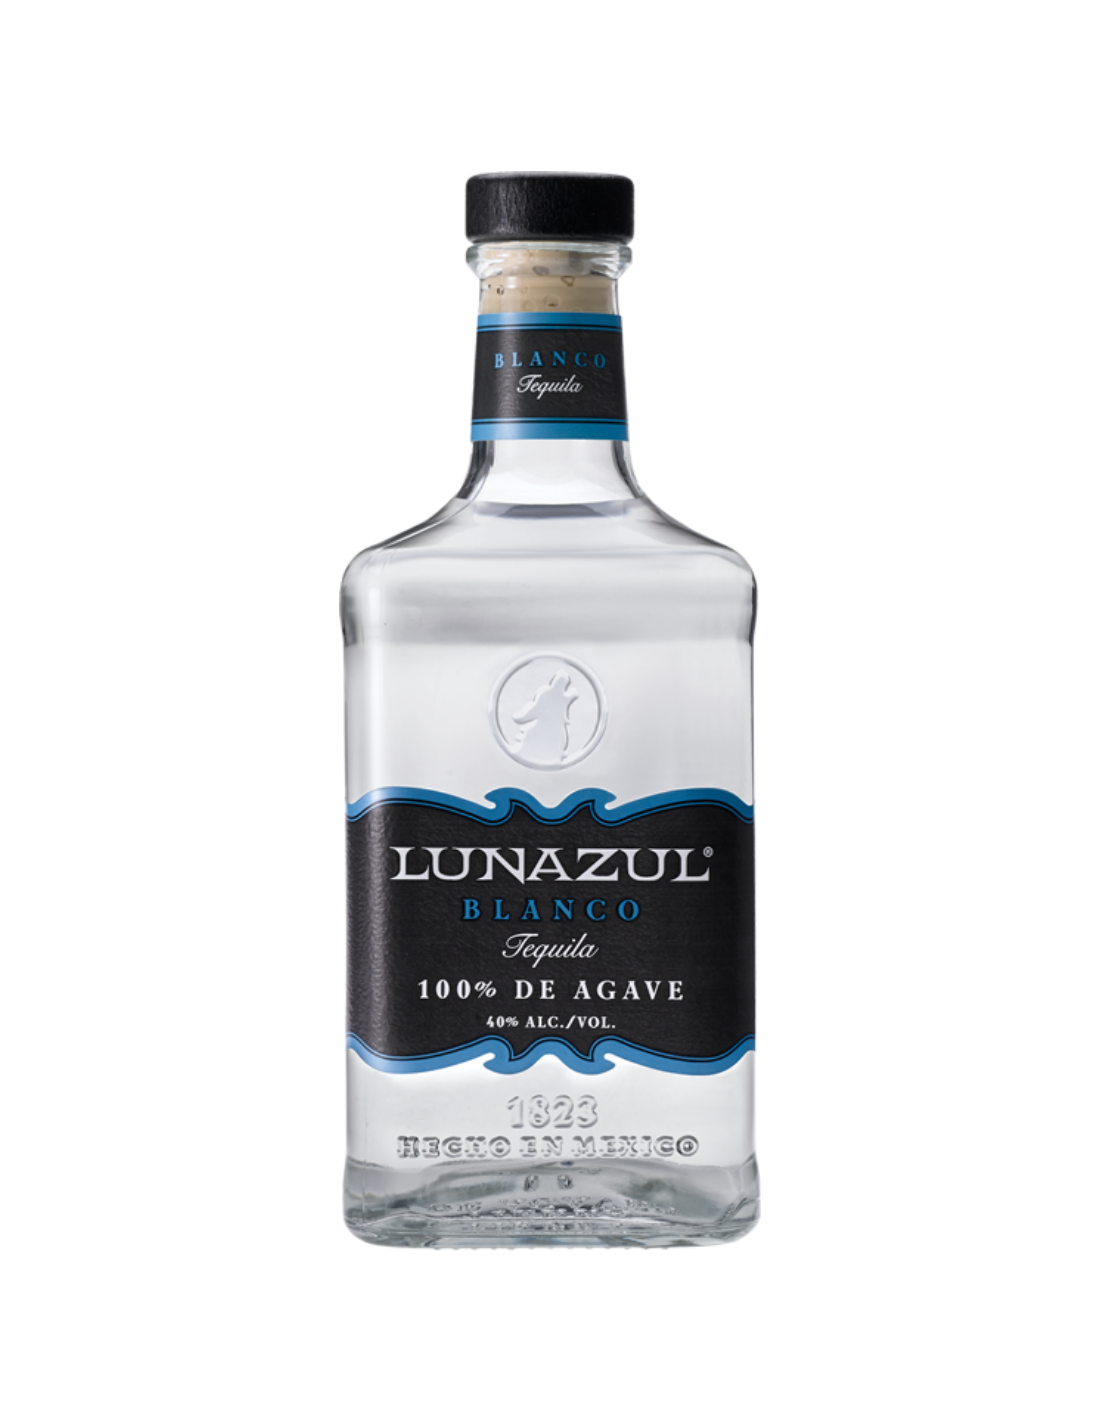 Tequila Lunazul Blanco, 0.7L, 40% alc., Mexic alcooldiscount.ro